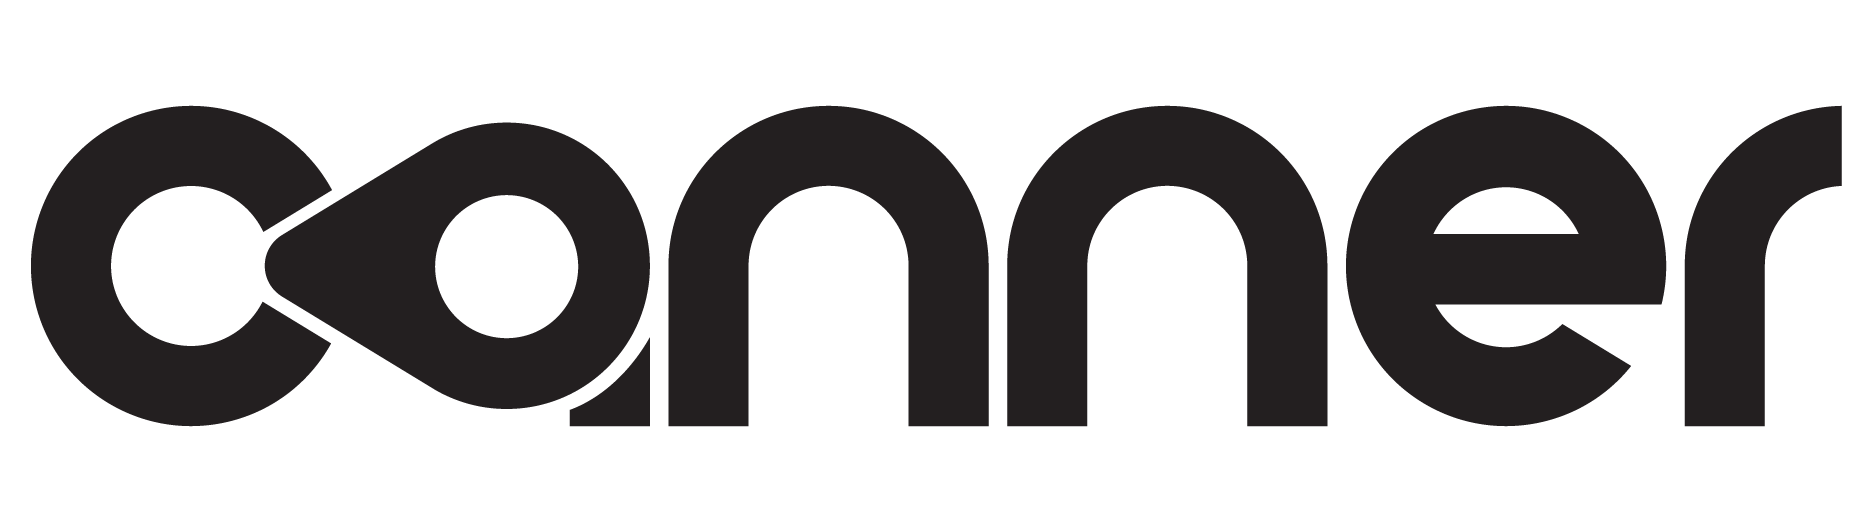 Canner Logo